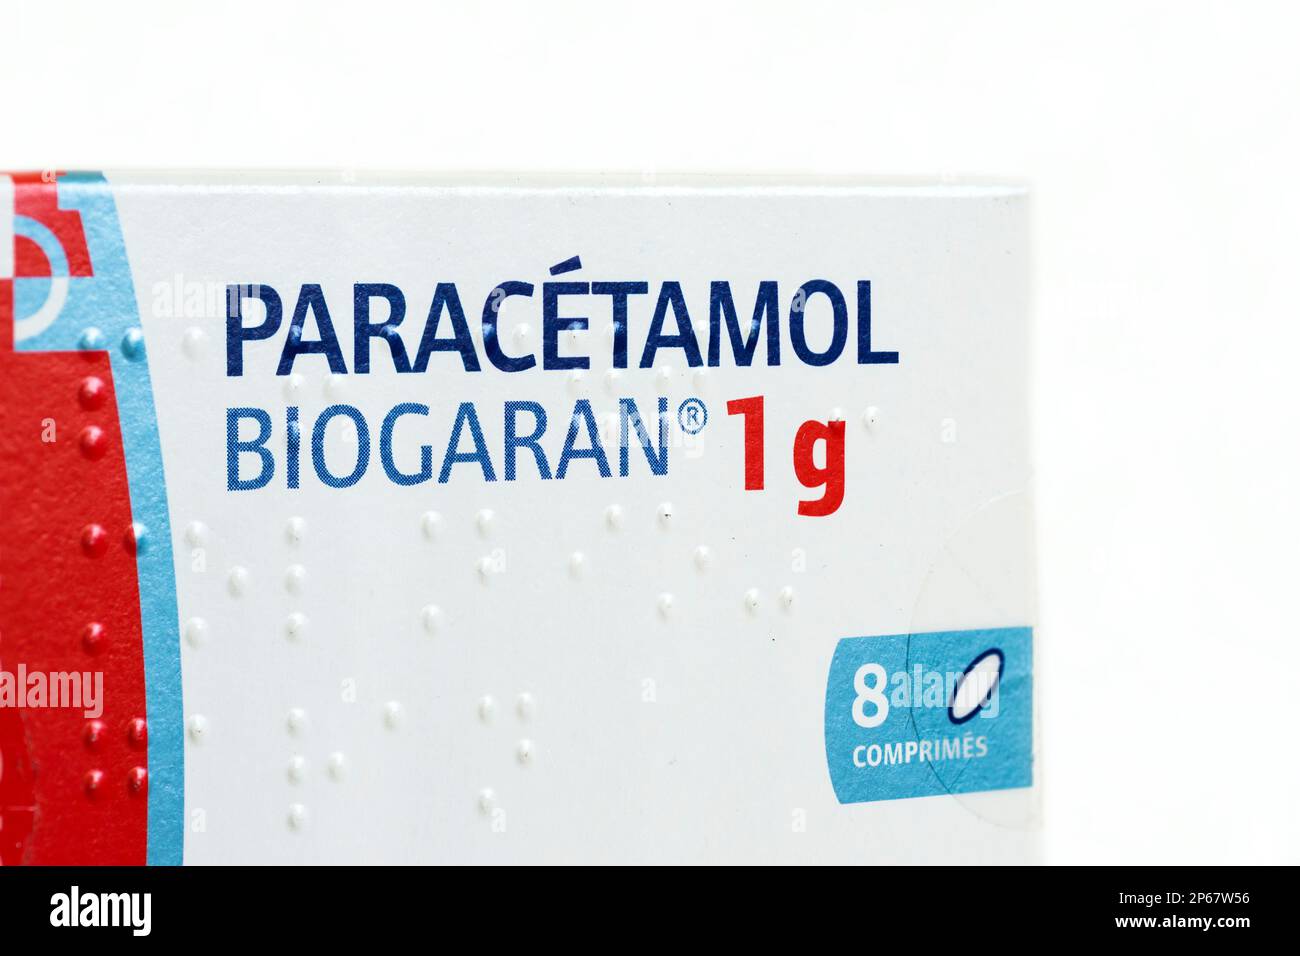 Paracetamol Biogaran 1g, Paracetamol tablets painkiller Stock Photo